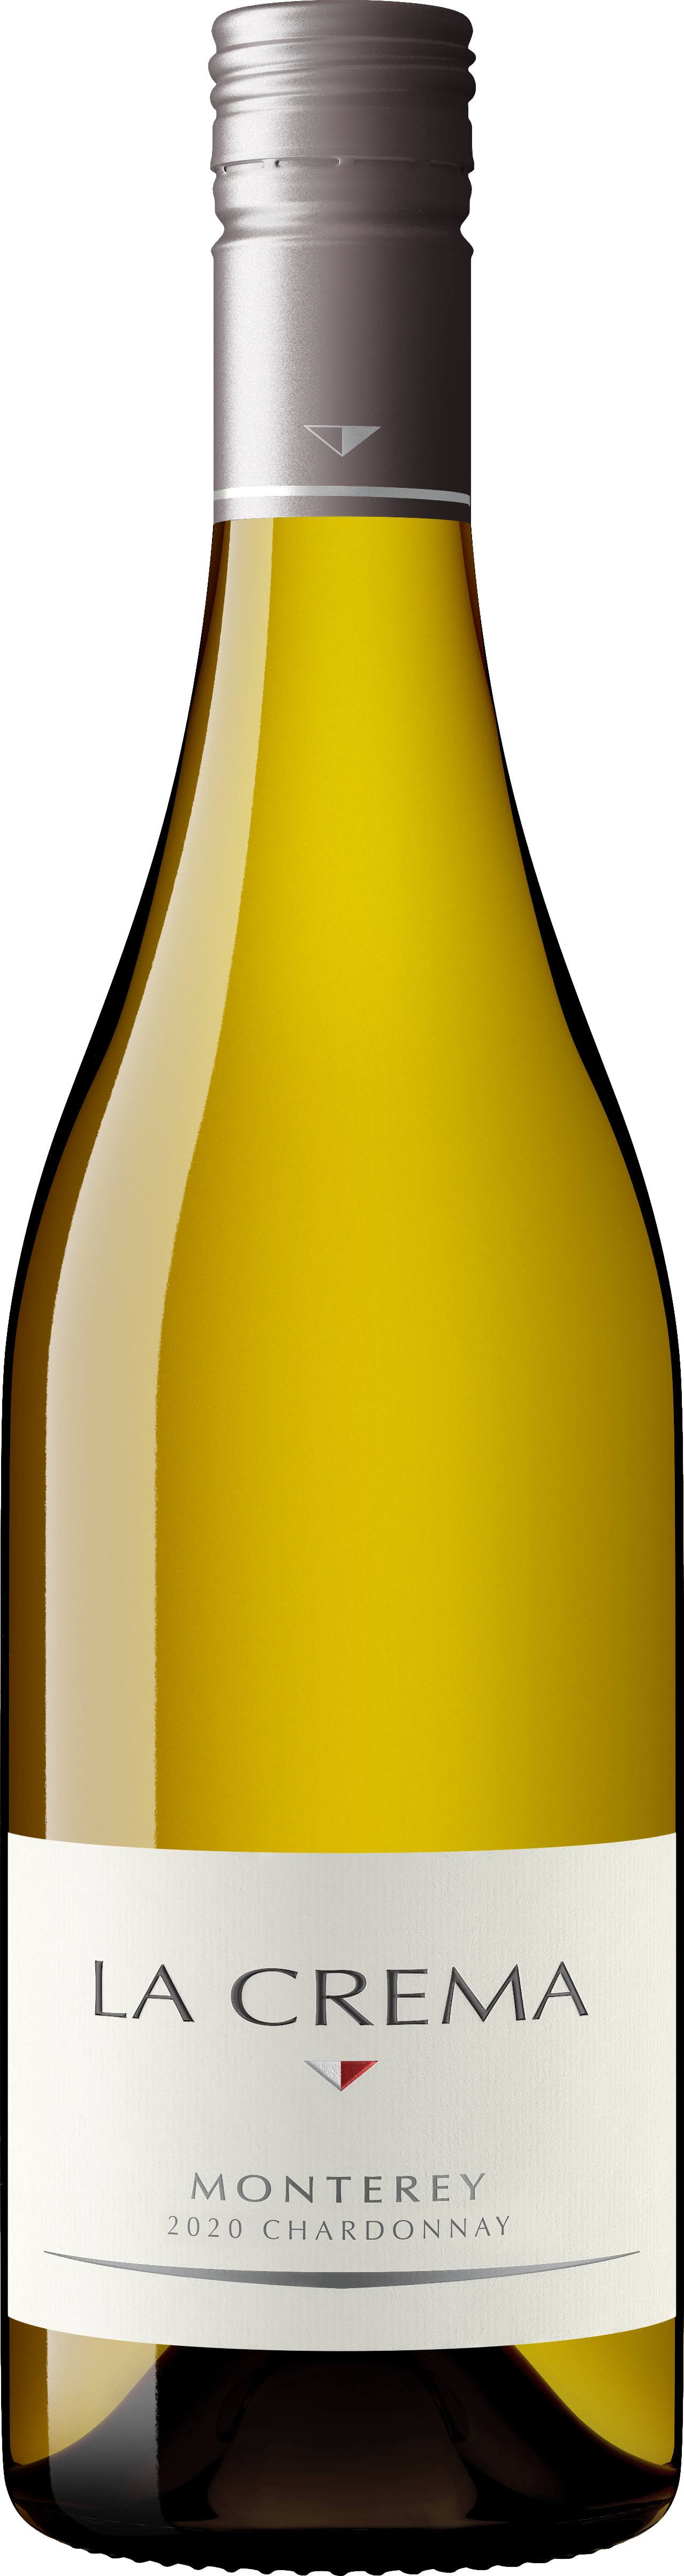 La Crema Chardonnay - Monterey, 2009